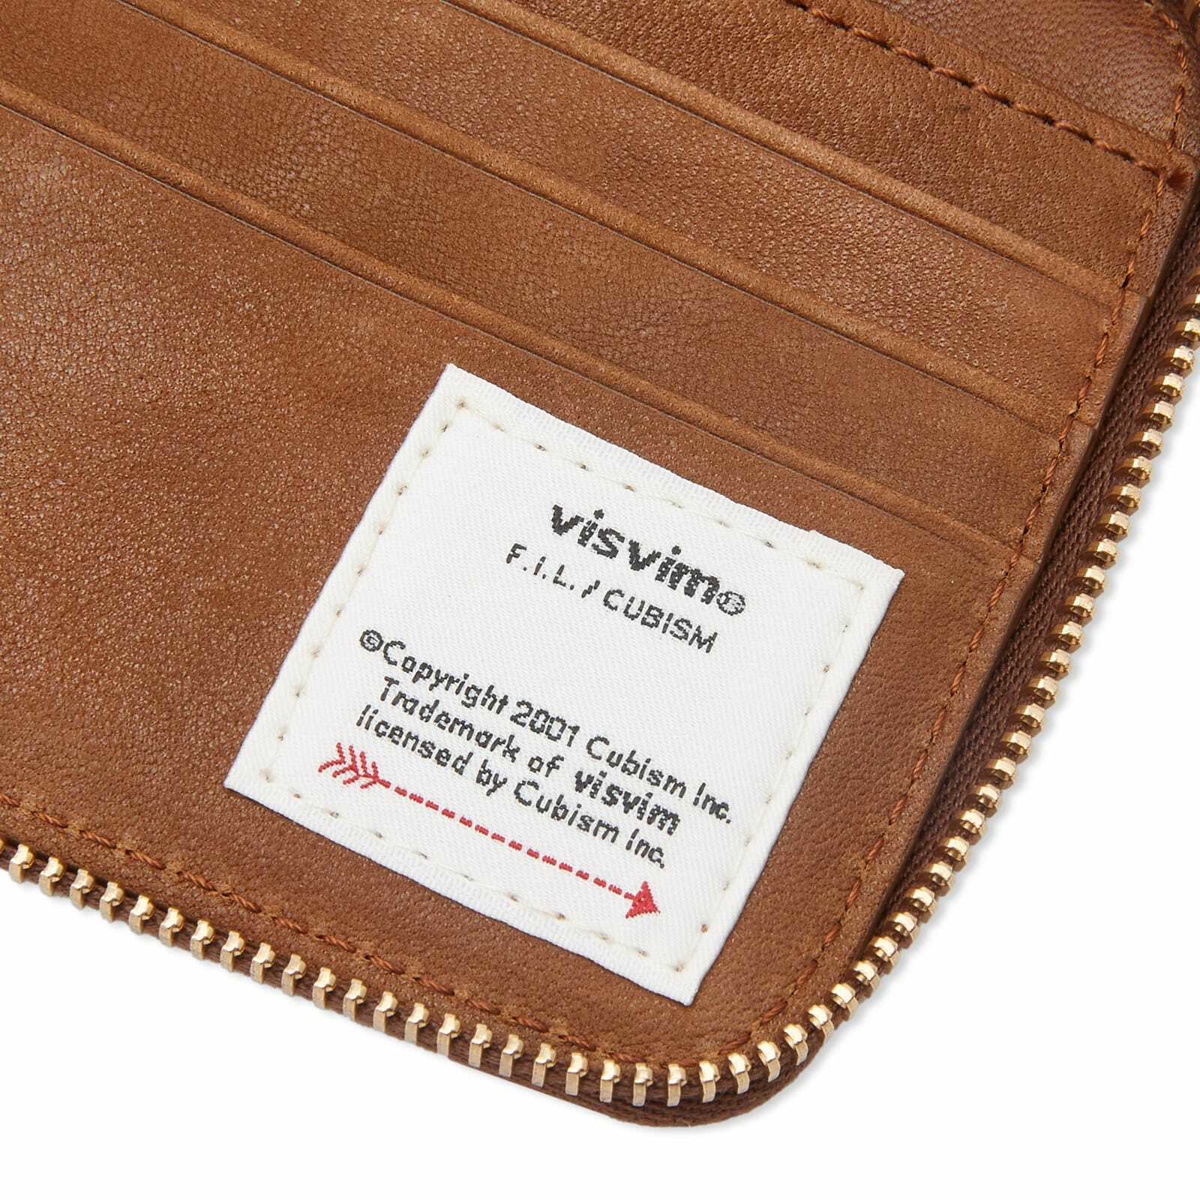 Visvim Men's Leather Bi Fold Wallet in Brown Visvim